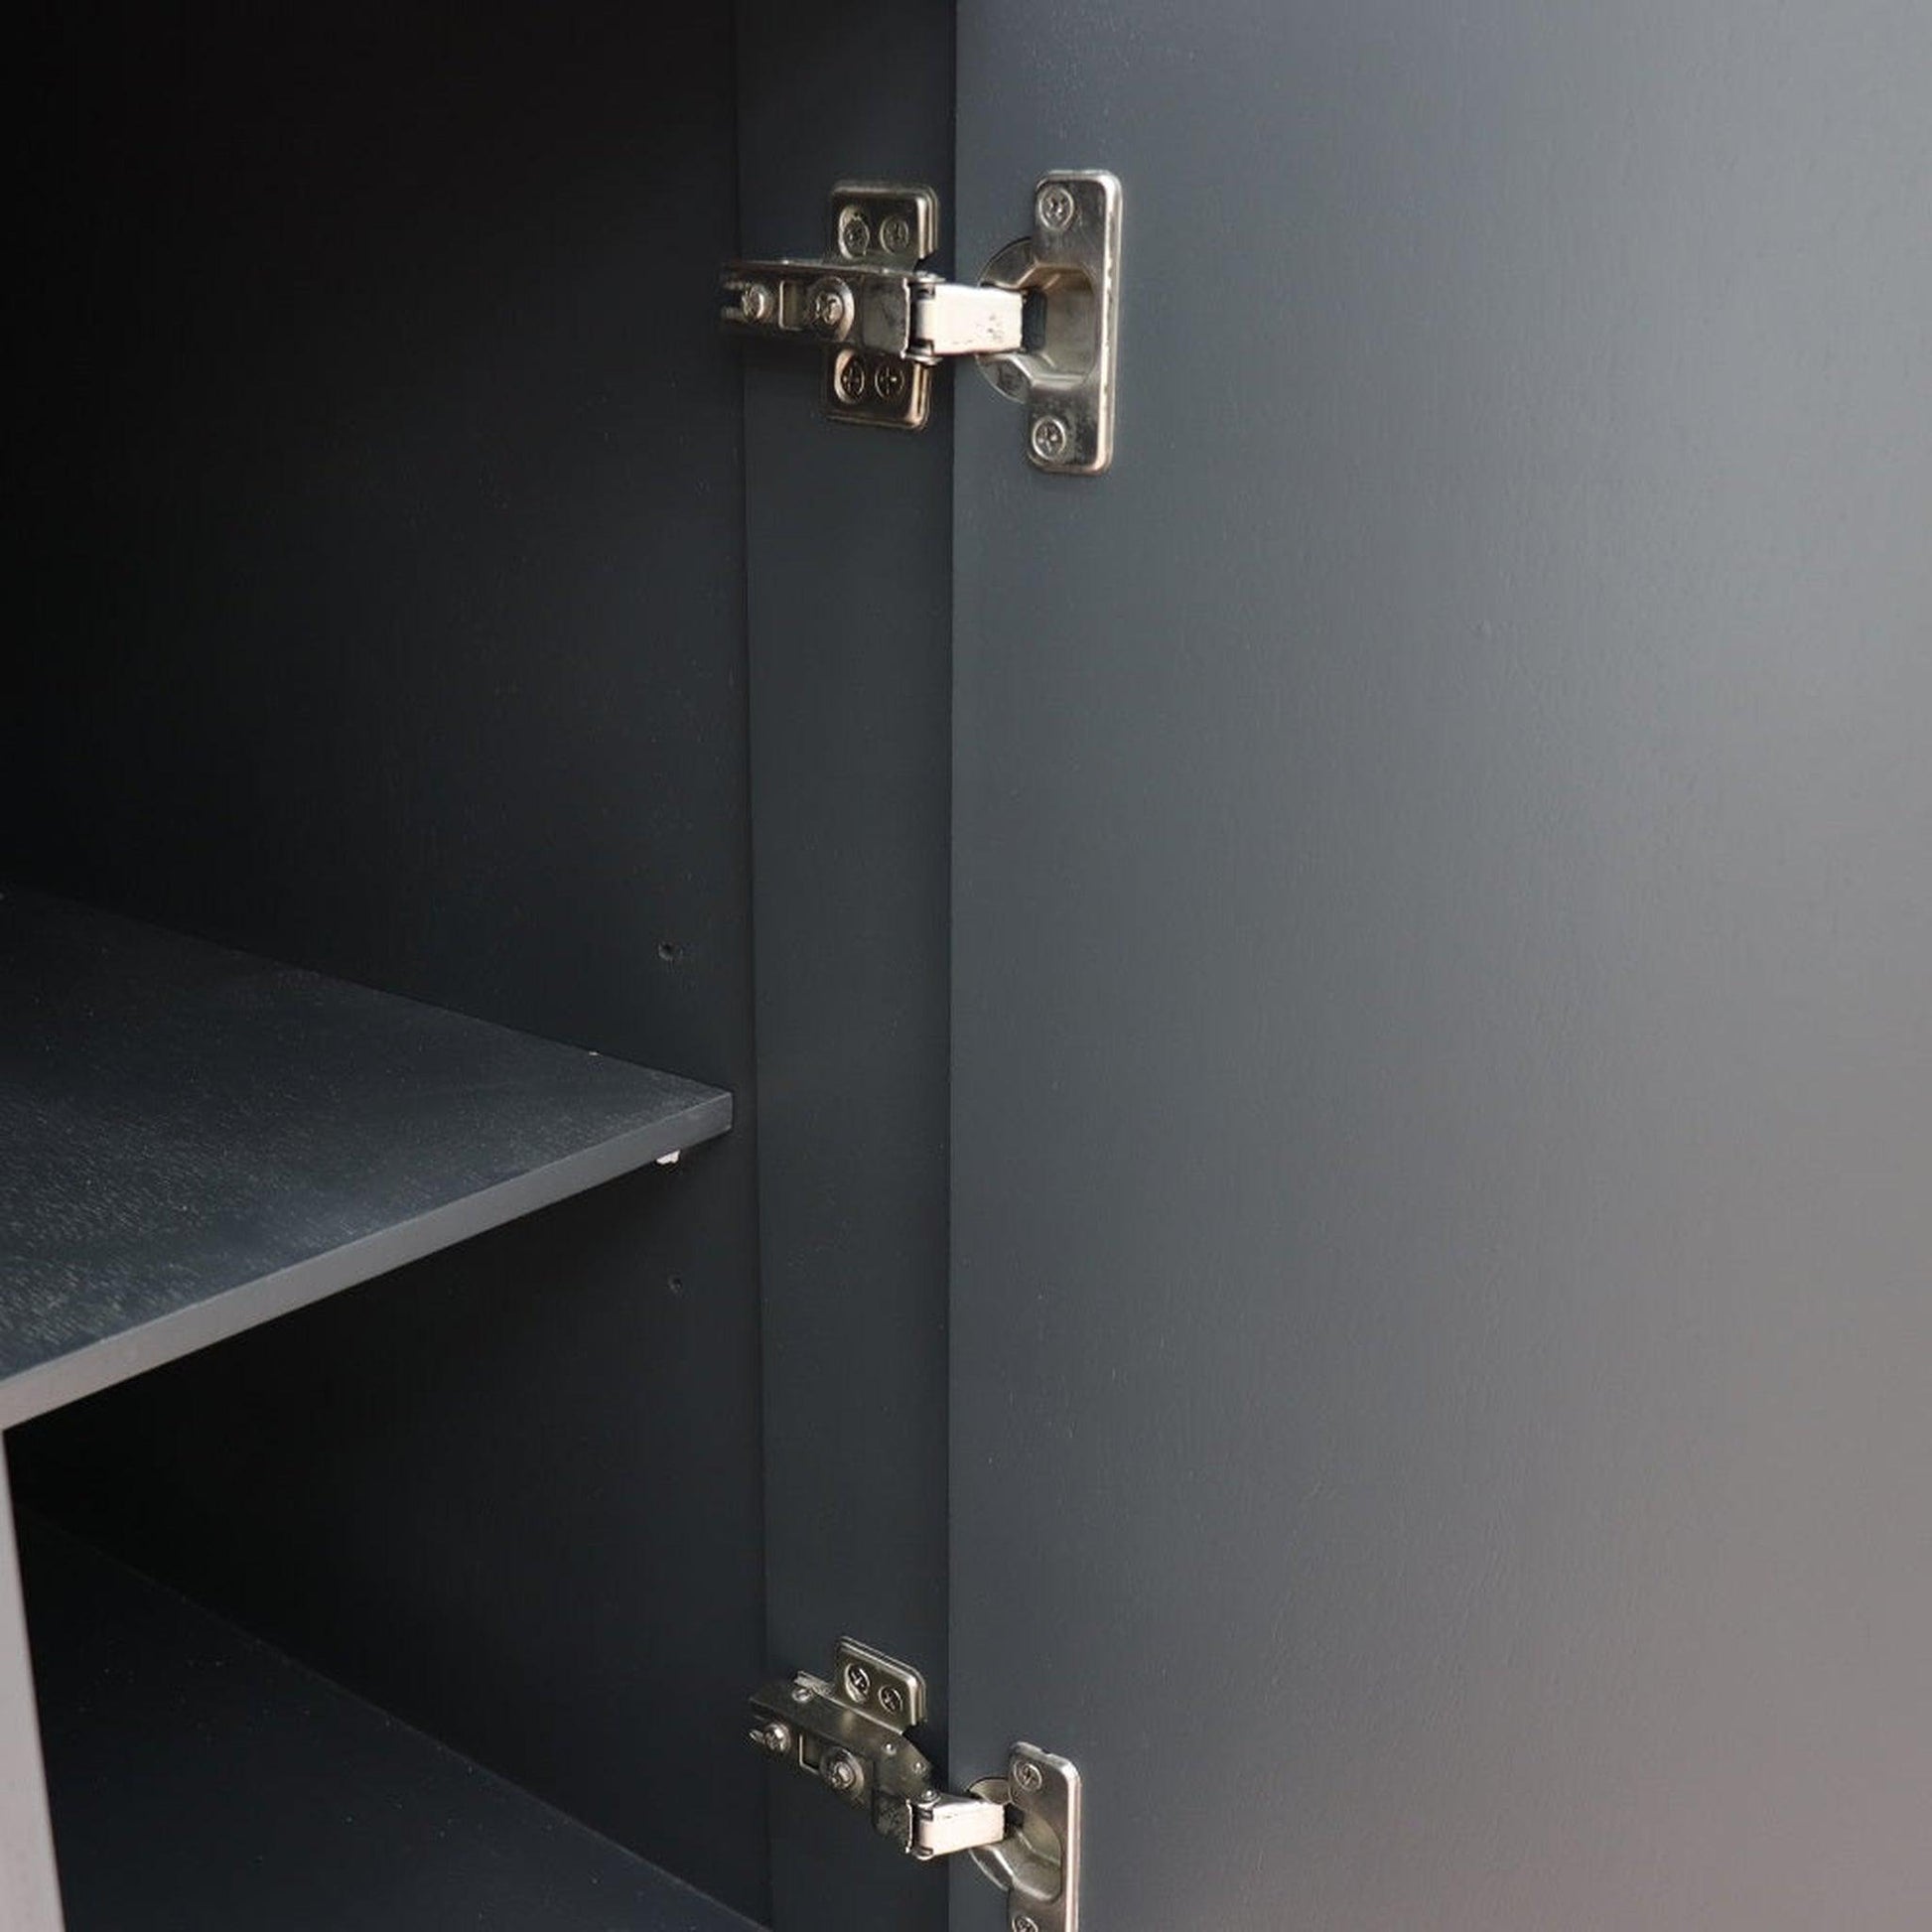 Bellaterra Home Terni 61" 4-Door 3-Drawer Dark Gray Freestanding Vanity Set With Ceramic Double Vessel Sink And White Quartz Top